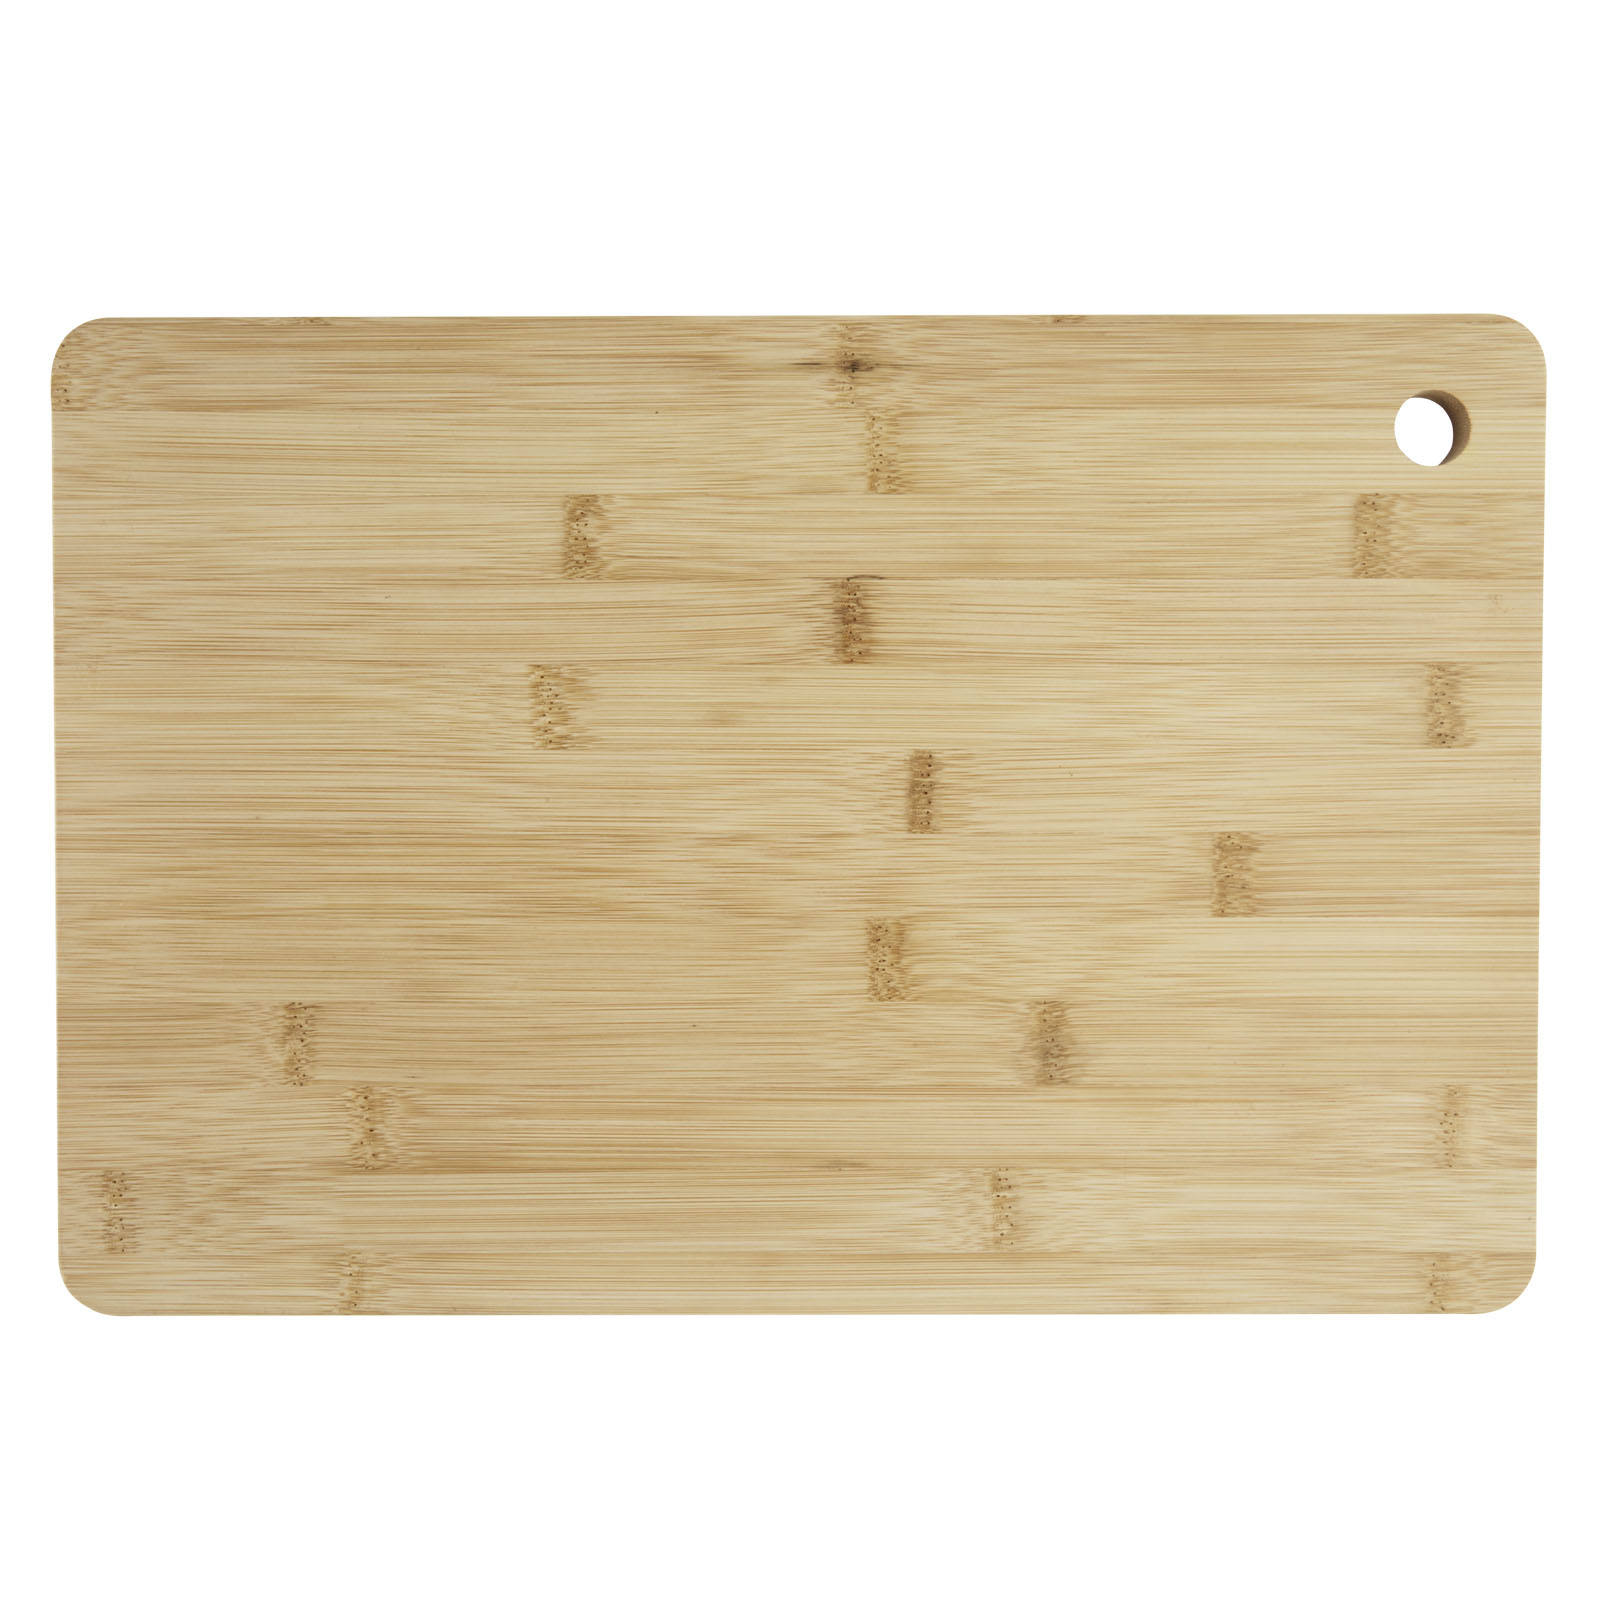 Advertising Cutting Boards - Harp bamboo cutting board - 2